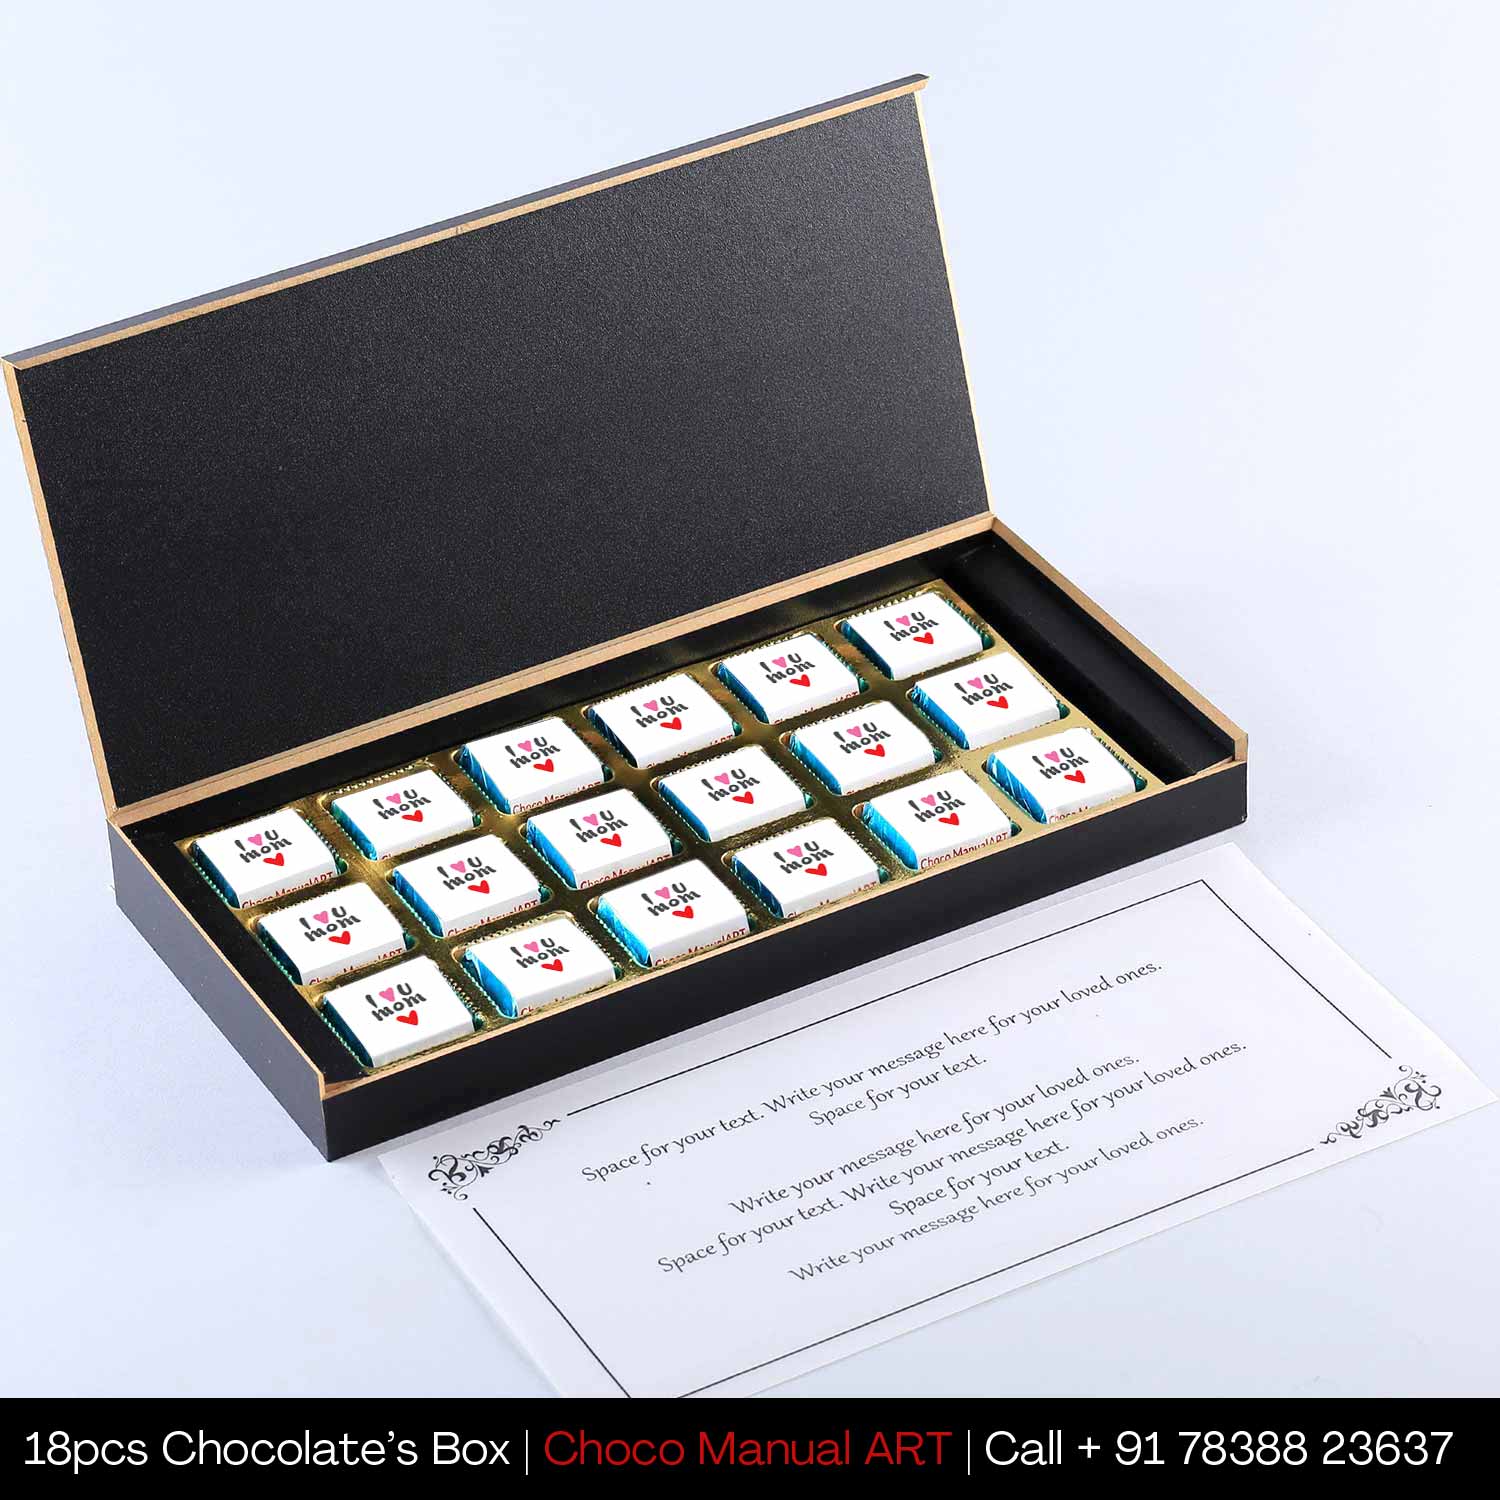 Floral Design Chocolates Printed on Box